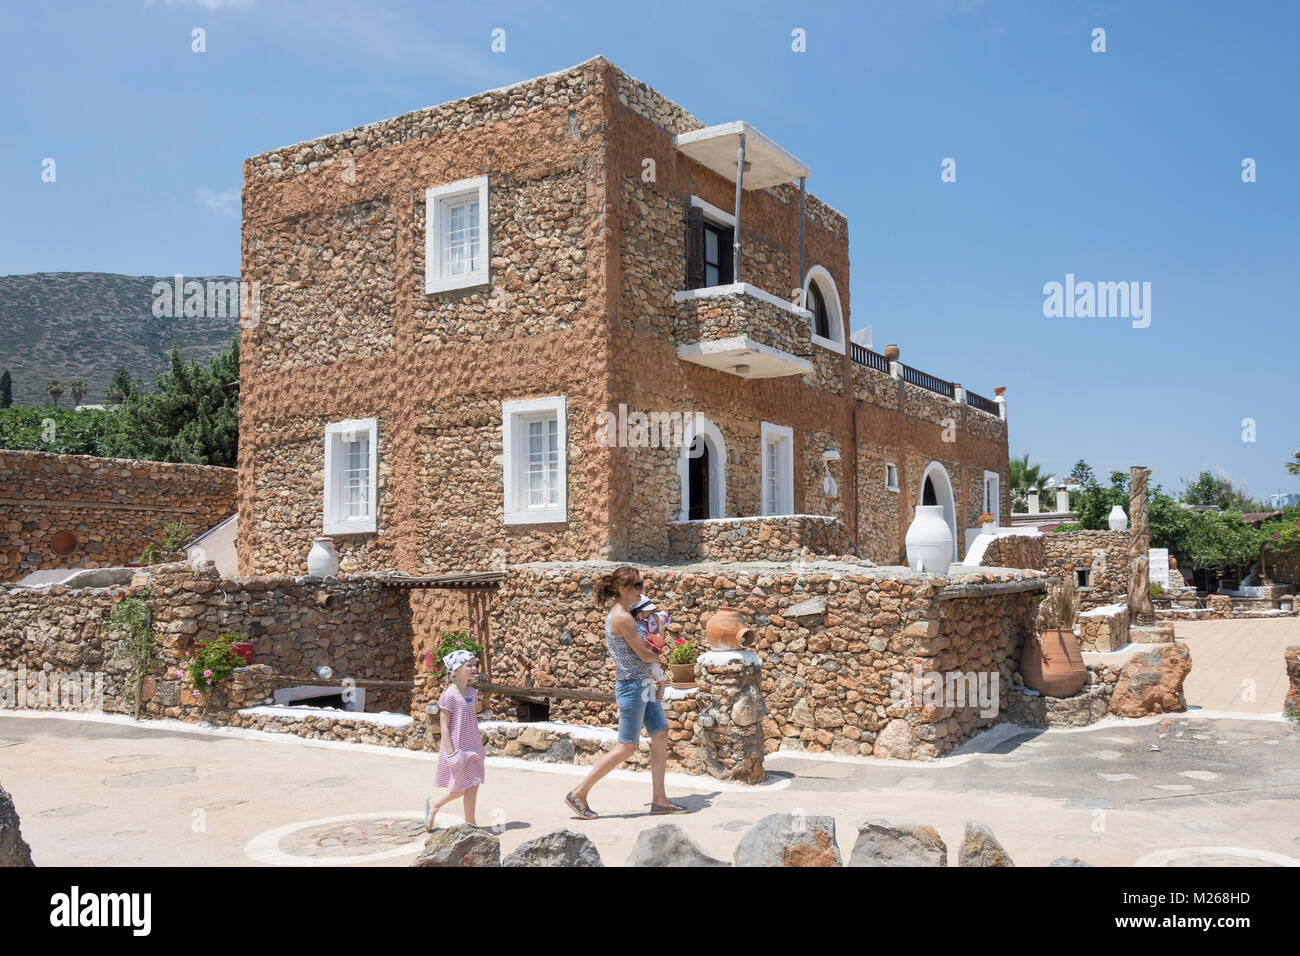 Typical Cretan house at Lychnostatis Cretan Open Air Museum, Hersonissos, Heraklion Region, Crete (Kriti), Greece Stock Photo